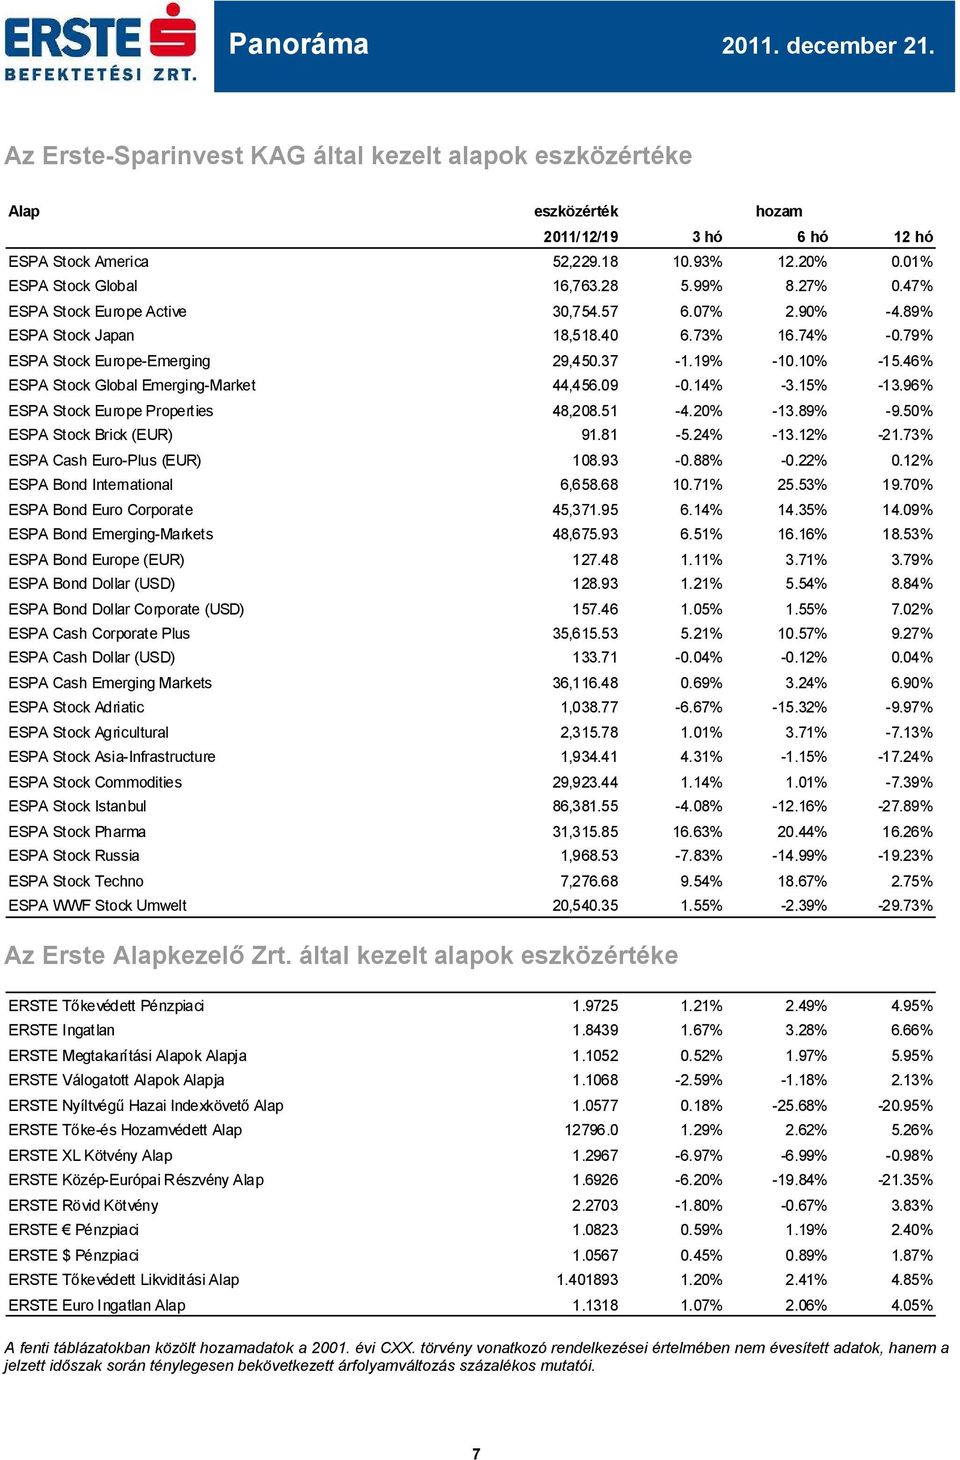 46% ESPA Stock Global Emerging-Market 44,456.09-0.14% -3.15% -13.96% ESPA Stock Europe Properties 48,208.51-4.20% -13.89% -9.50% ESPA Stock Brick (EUR) 91.81-5.24% -13.12% -21.